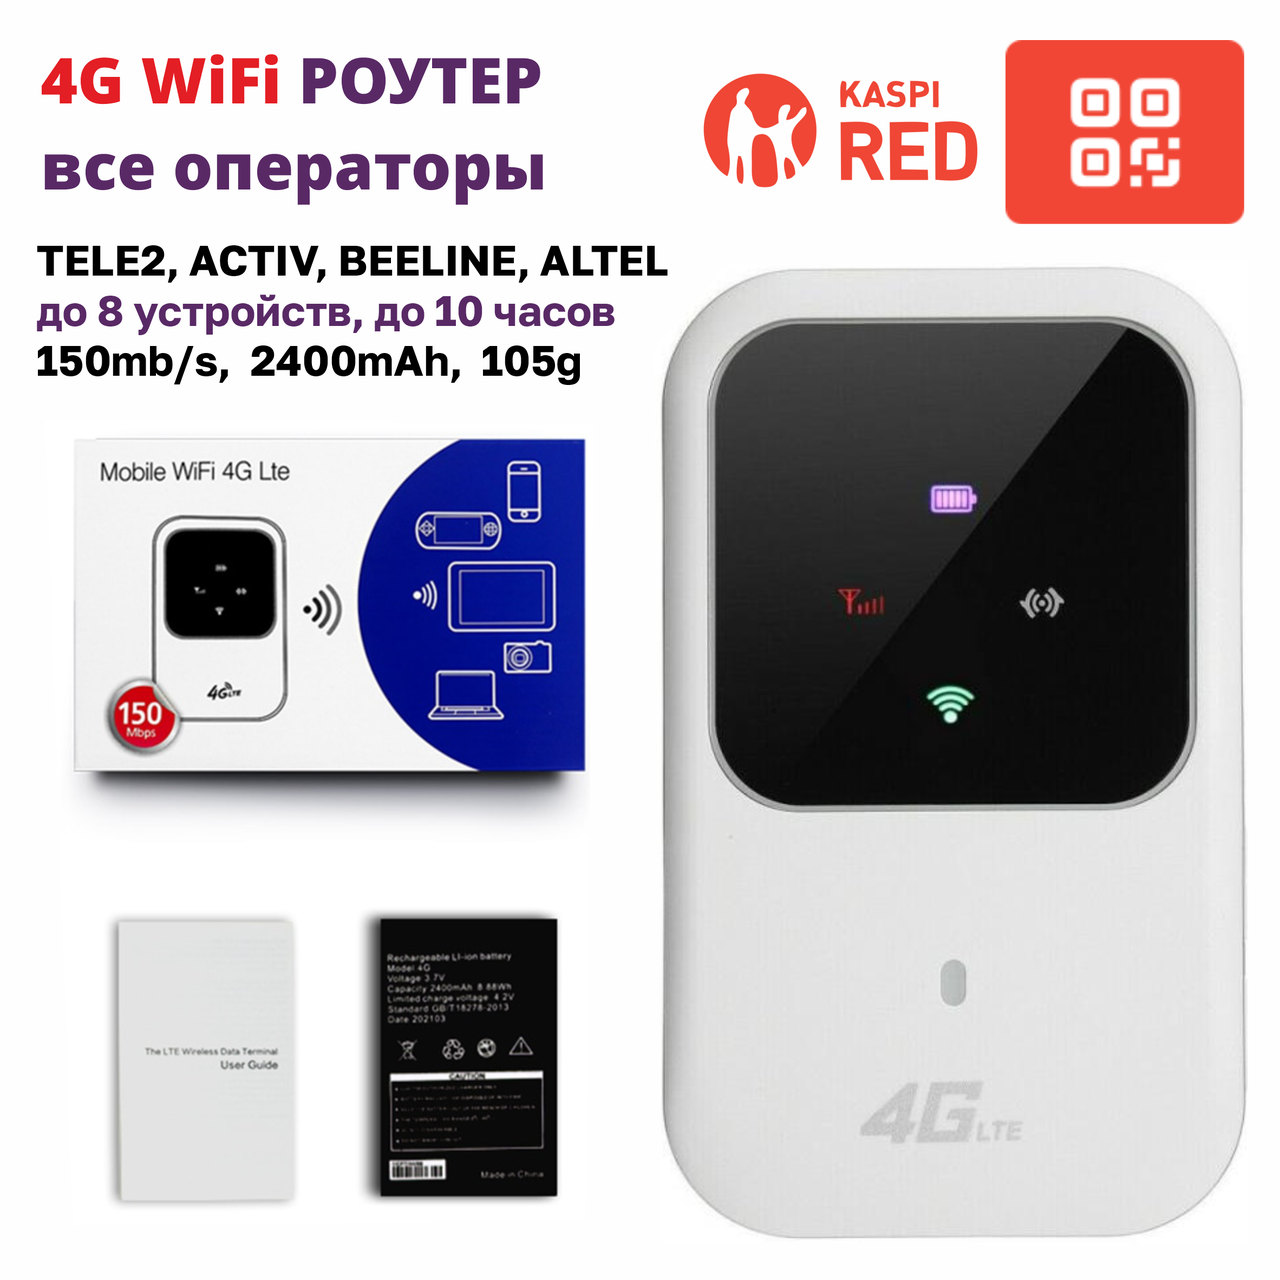 Модем 4G 3G LTE WiFi роутер беспроводной 150 мб/с SIM карты СИМ Tele2 Билайн Актив Kcell Altel, фото 1